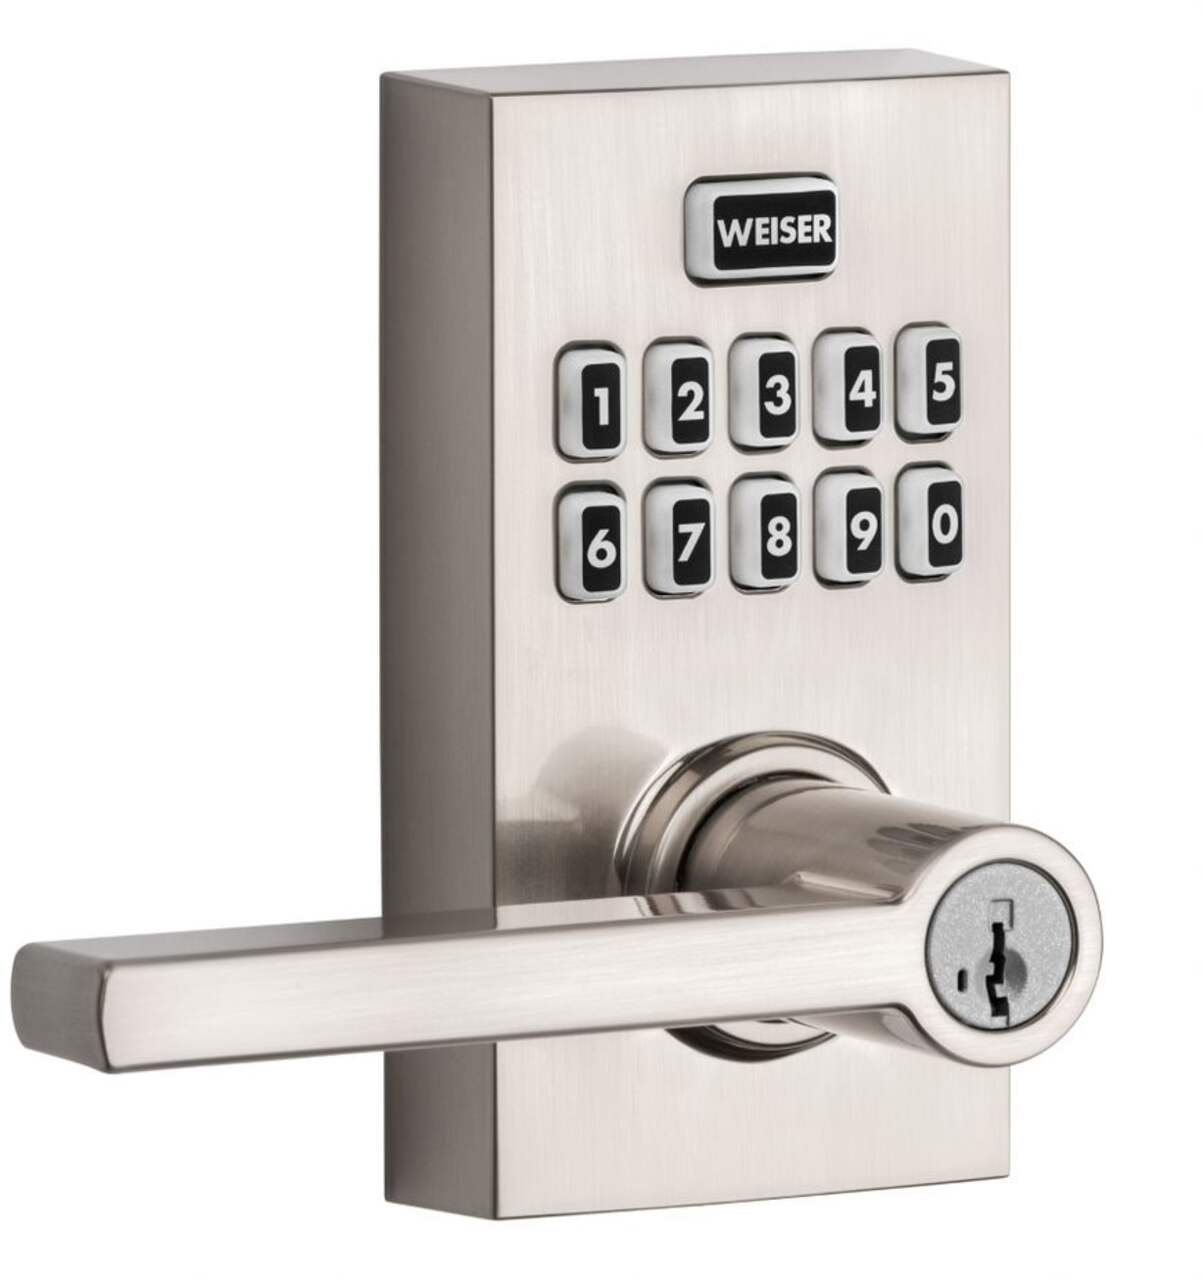 Weiser SmartCode 10 Electronic Residential Keypad Deadbolt Door